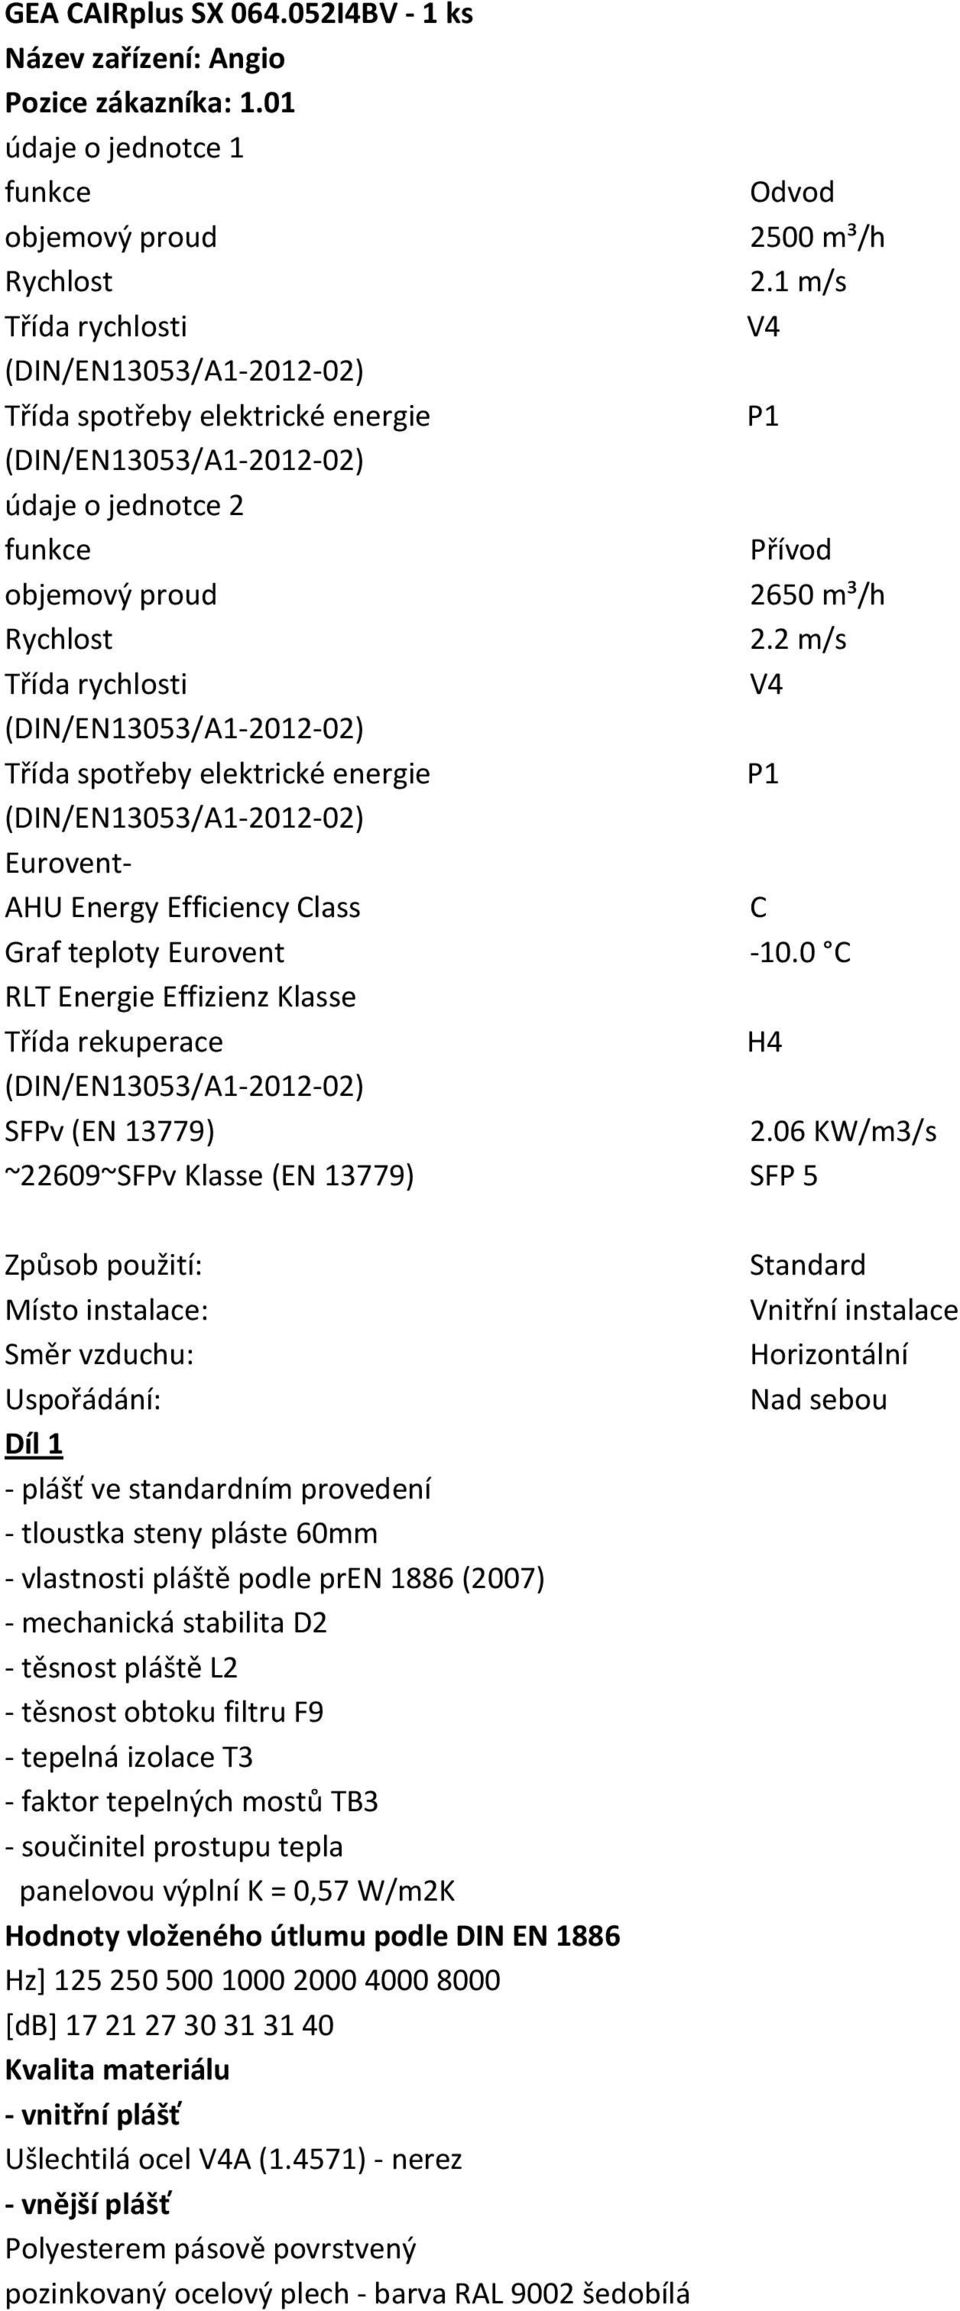 2 m/s Třída rychlosti V4 (DIN/EN13053/A1-2012-02) Třída spotřeby elektrické energie P1 (DIN/EN13053/A1-2012-02) Eurovent- AHU Energy Efficiency Class C Graf teploty Eurovent -10.